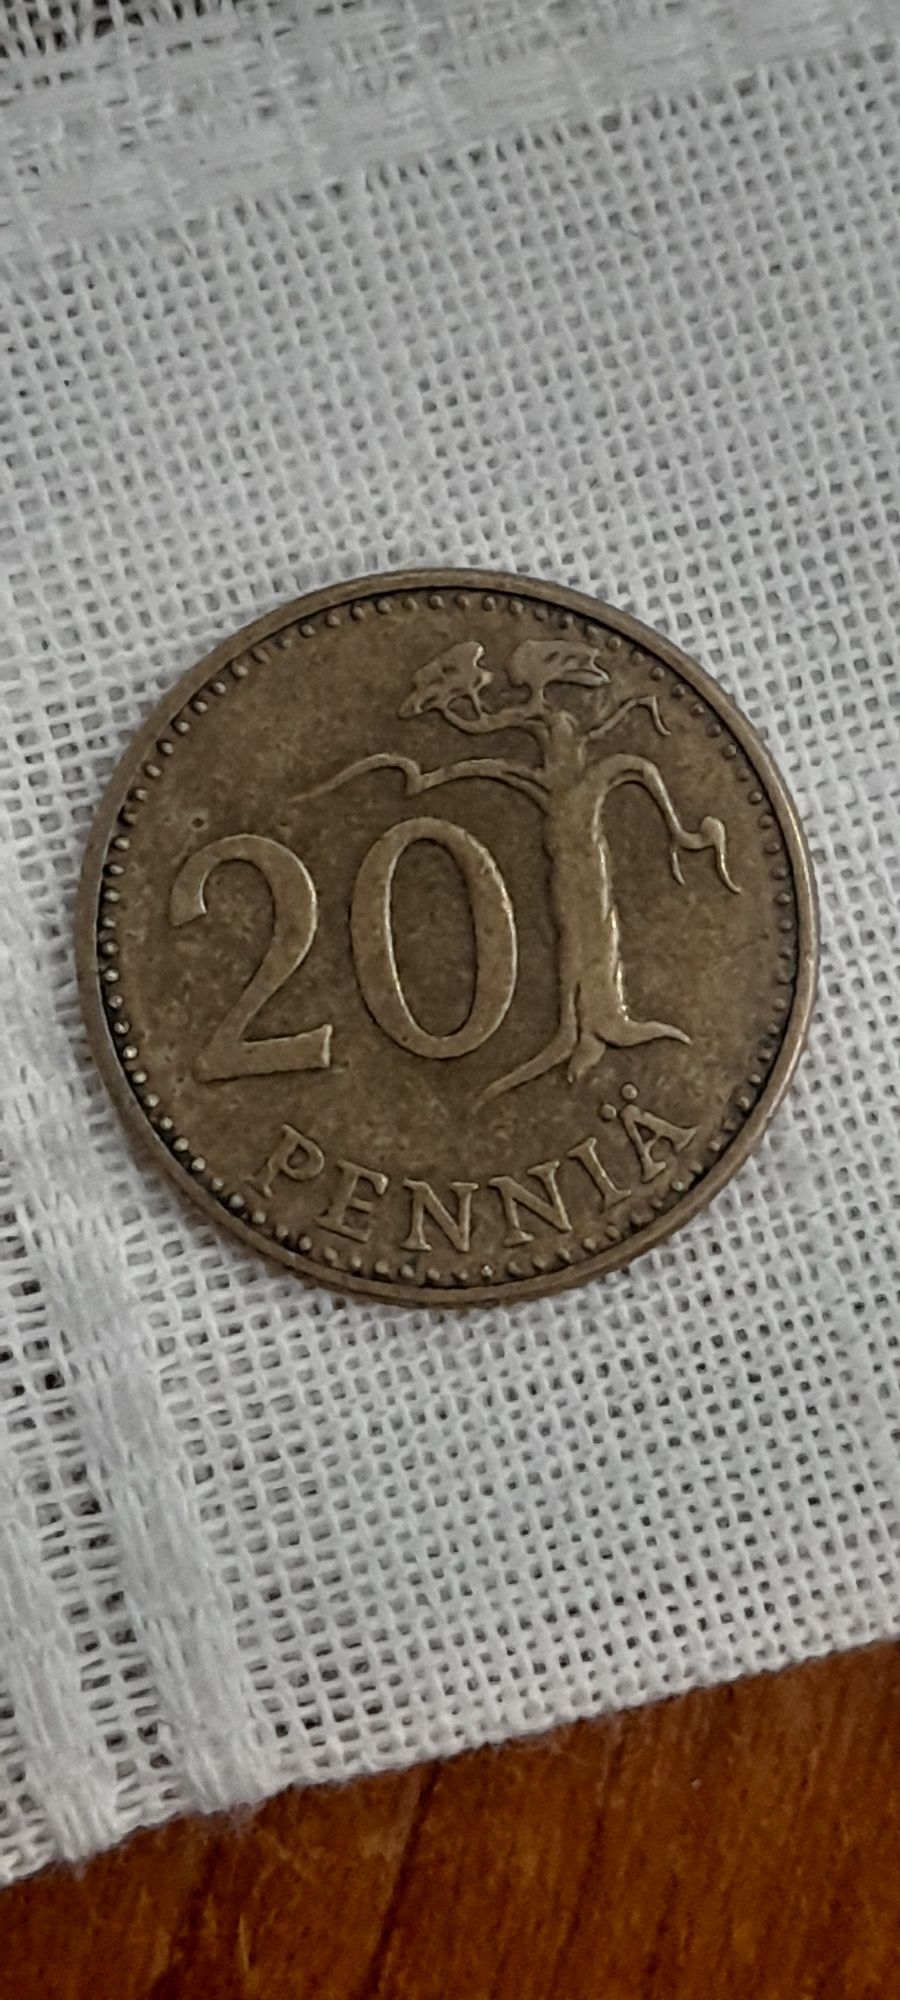 Monede vechi valoroase!